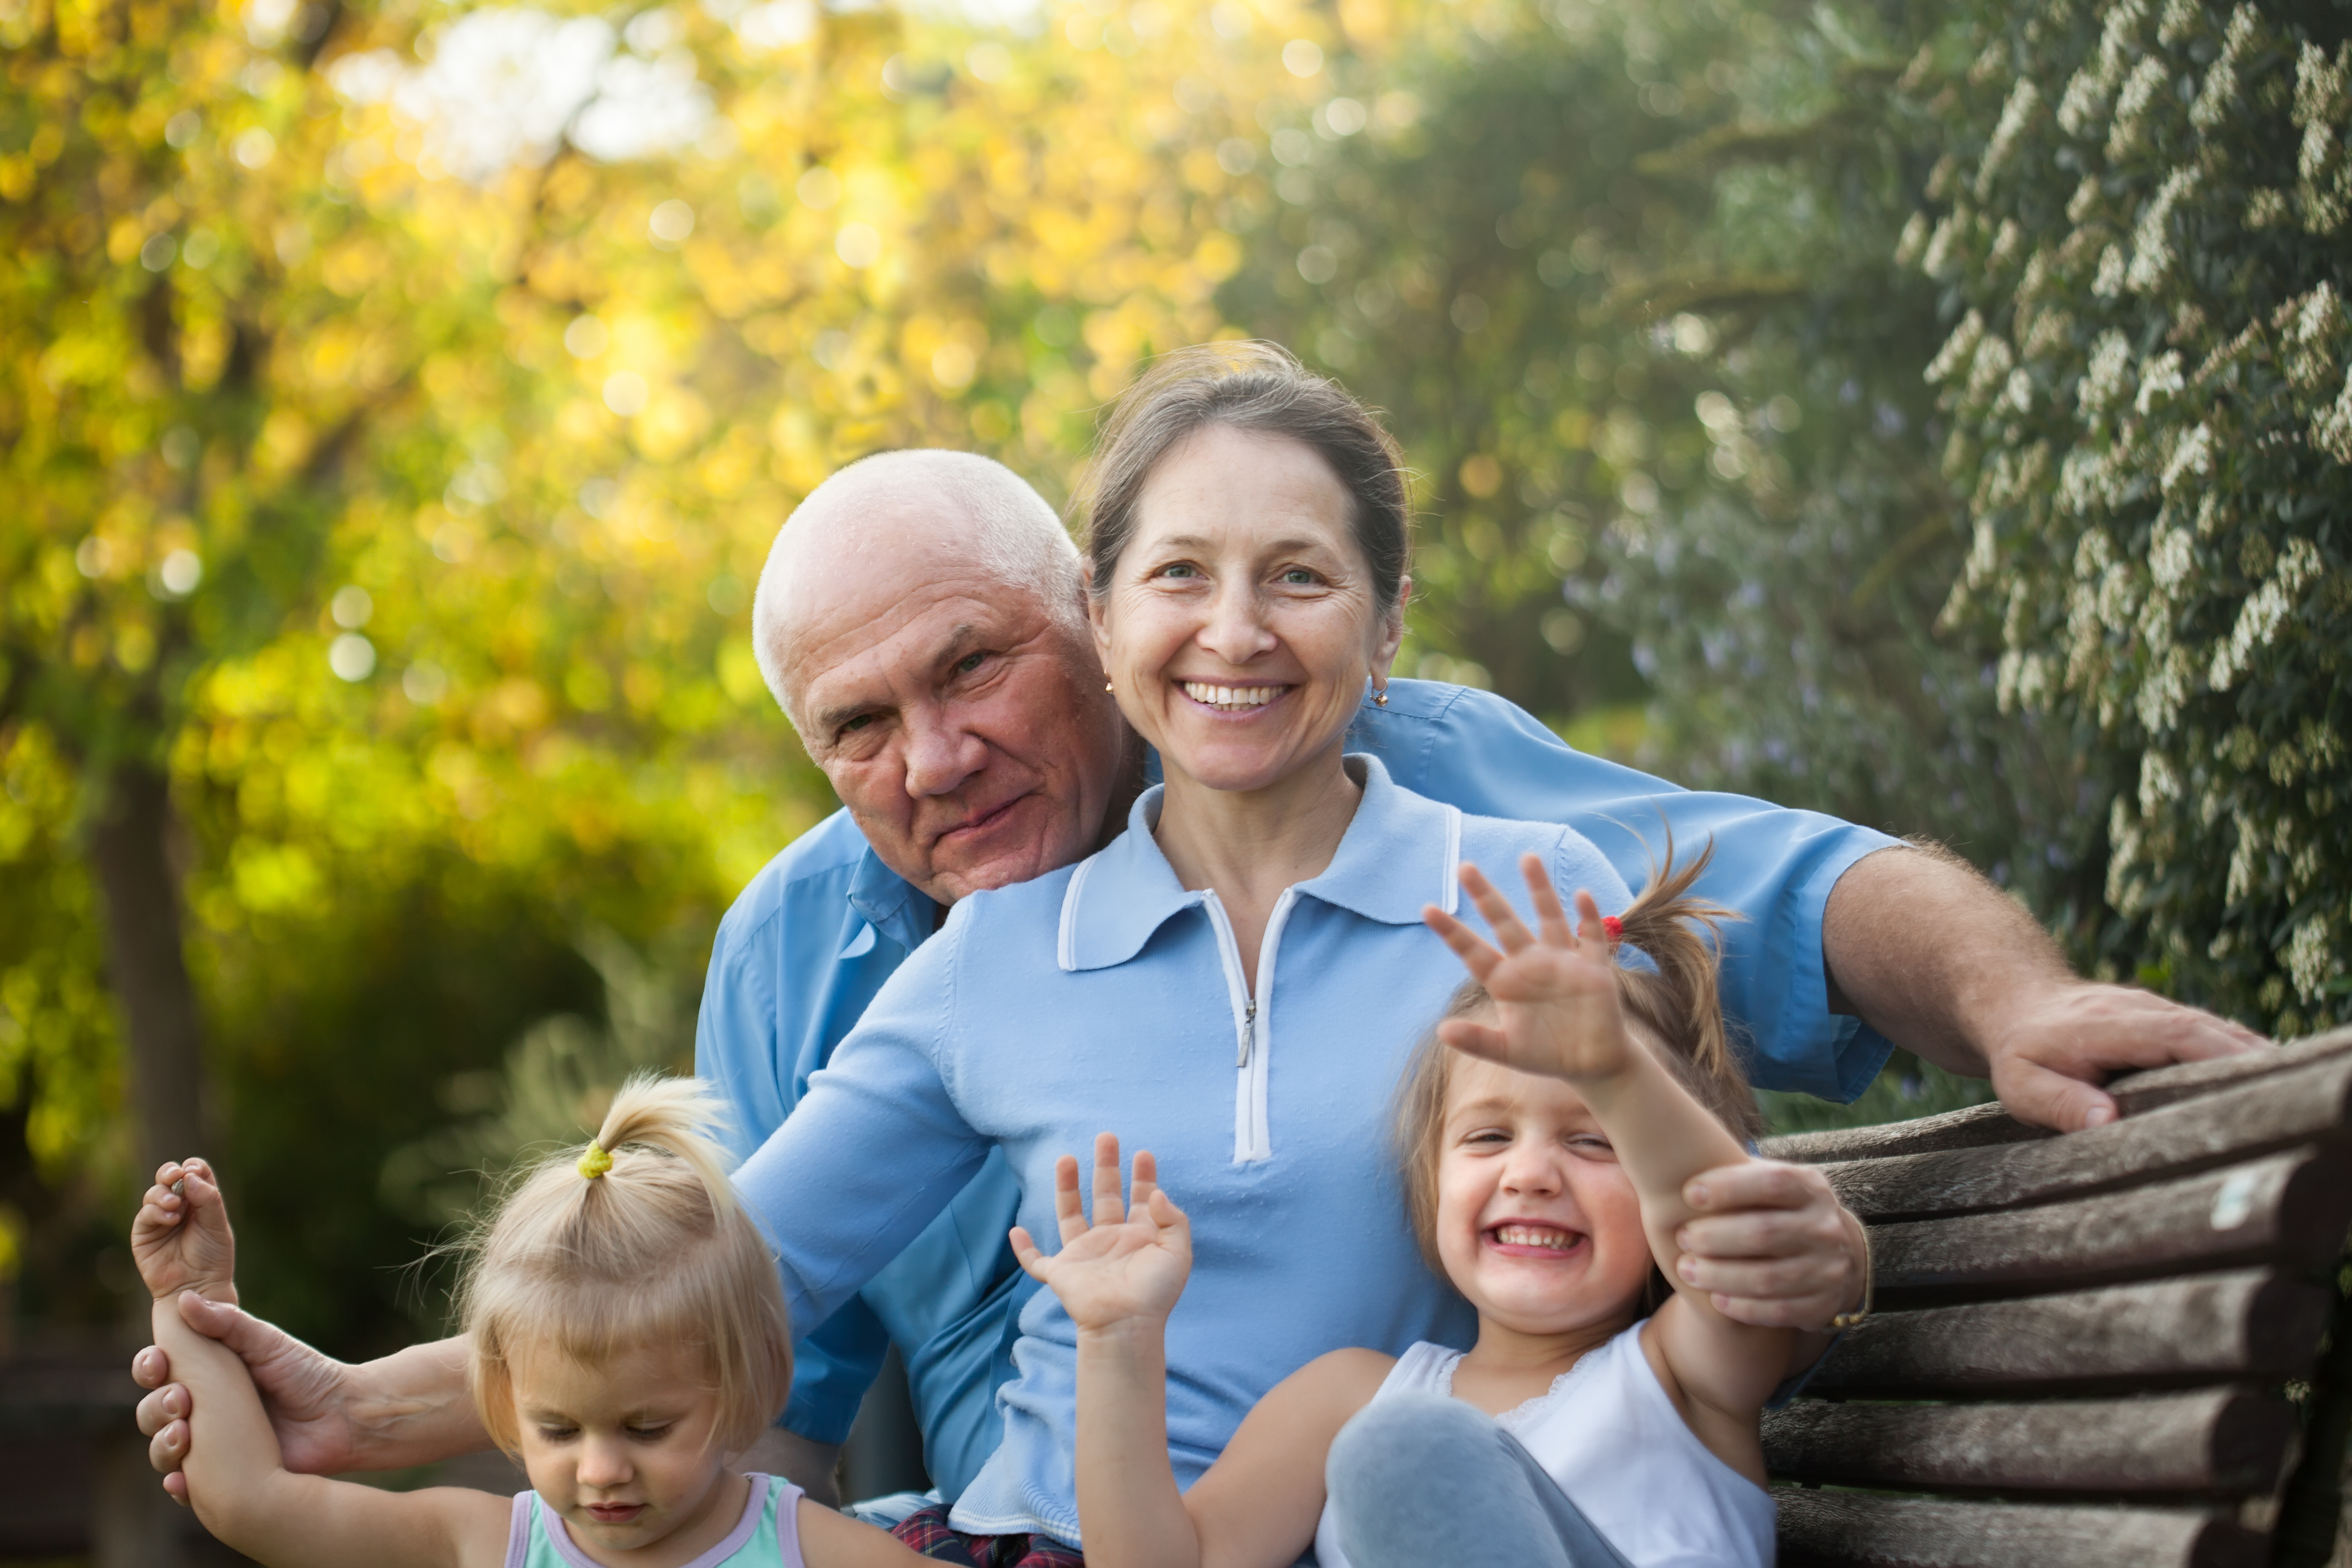 Senior couple sitting with their grandchildren in a park | Source: Shutterstock